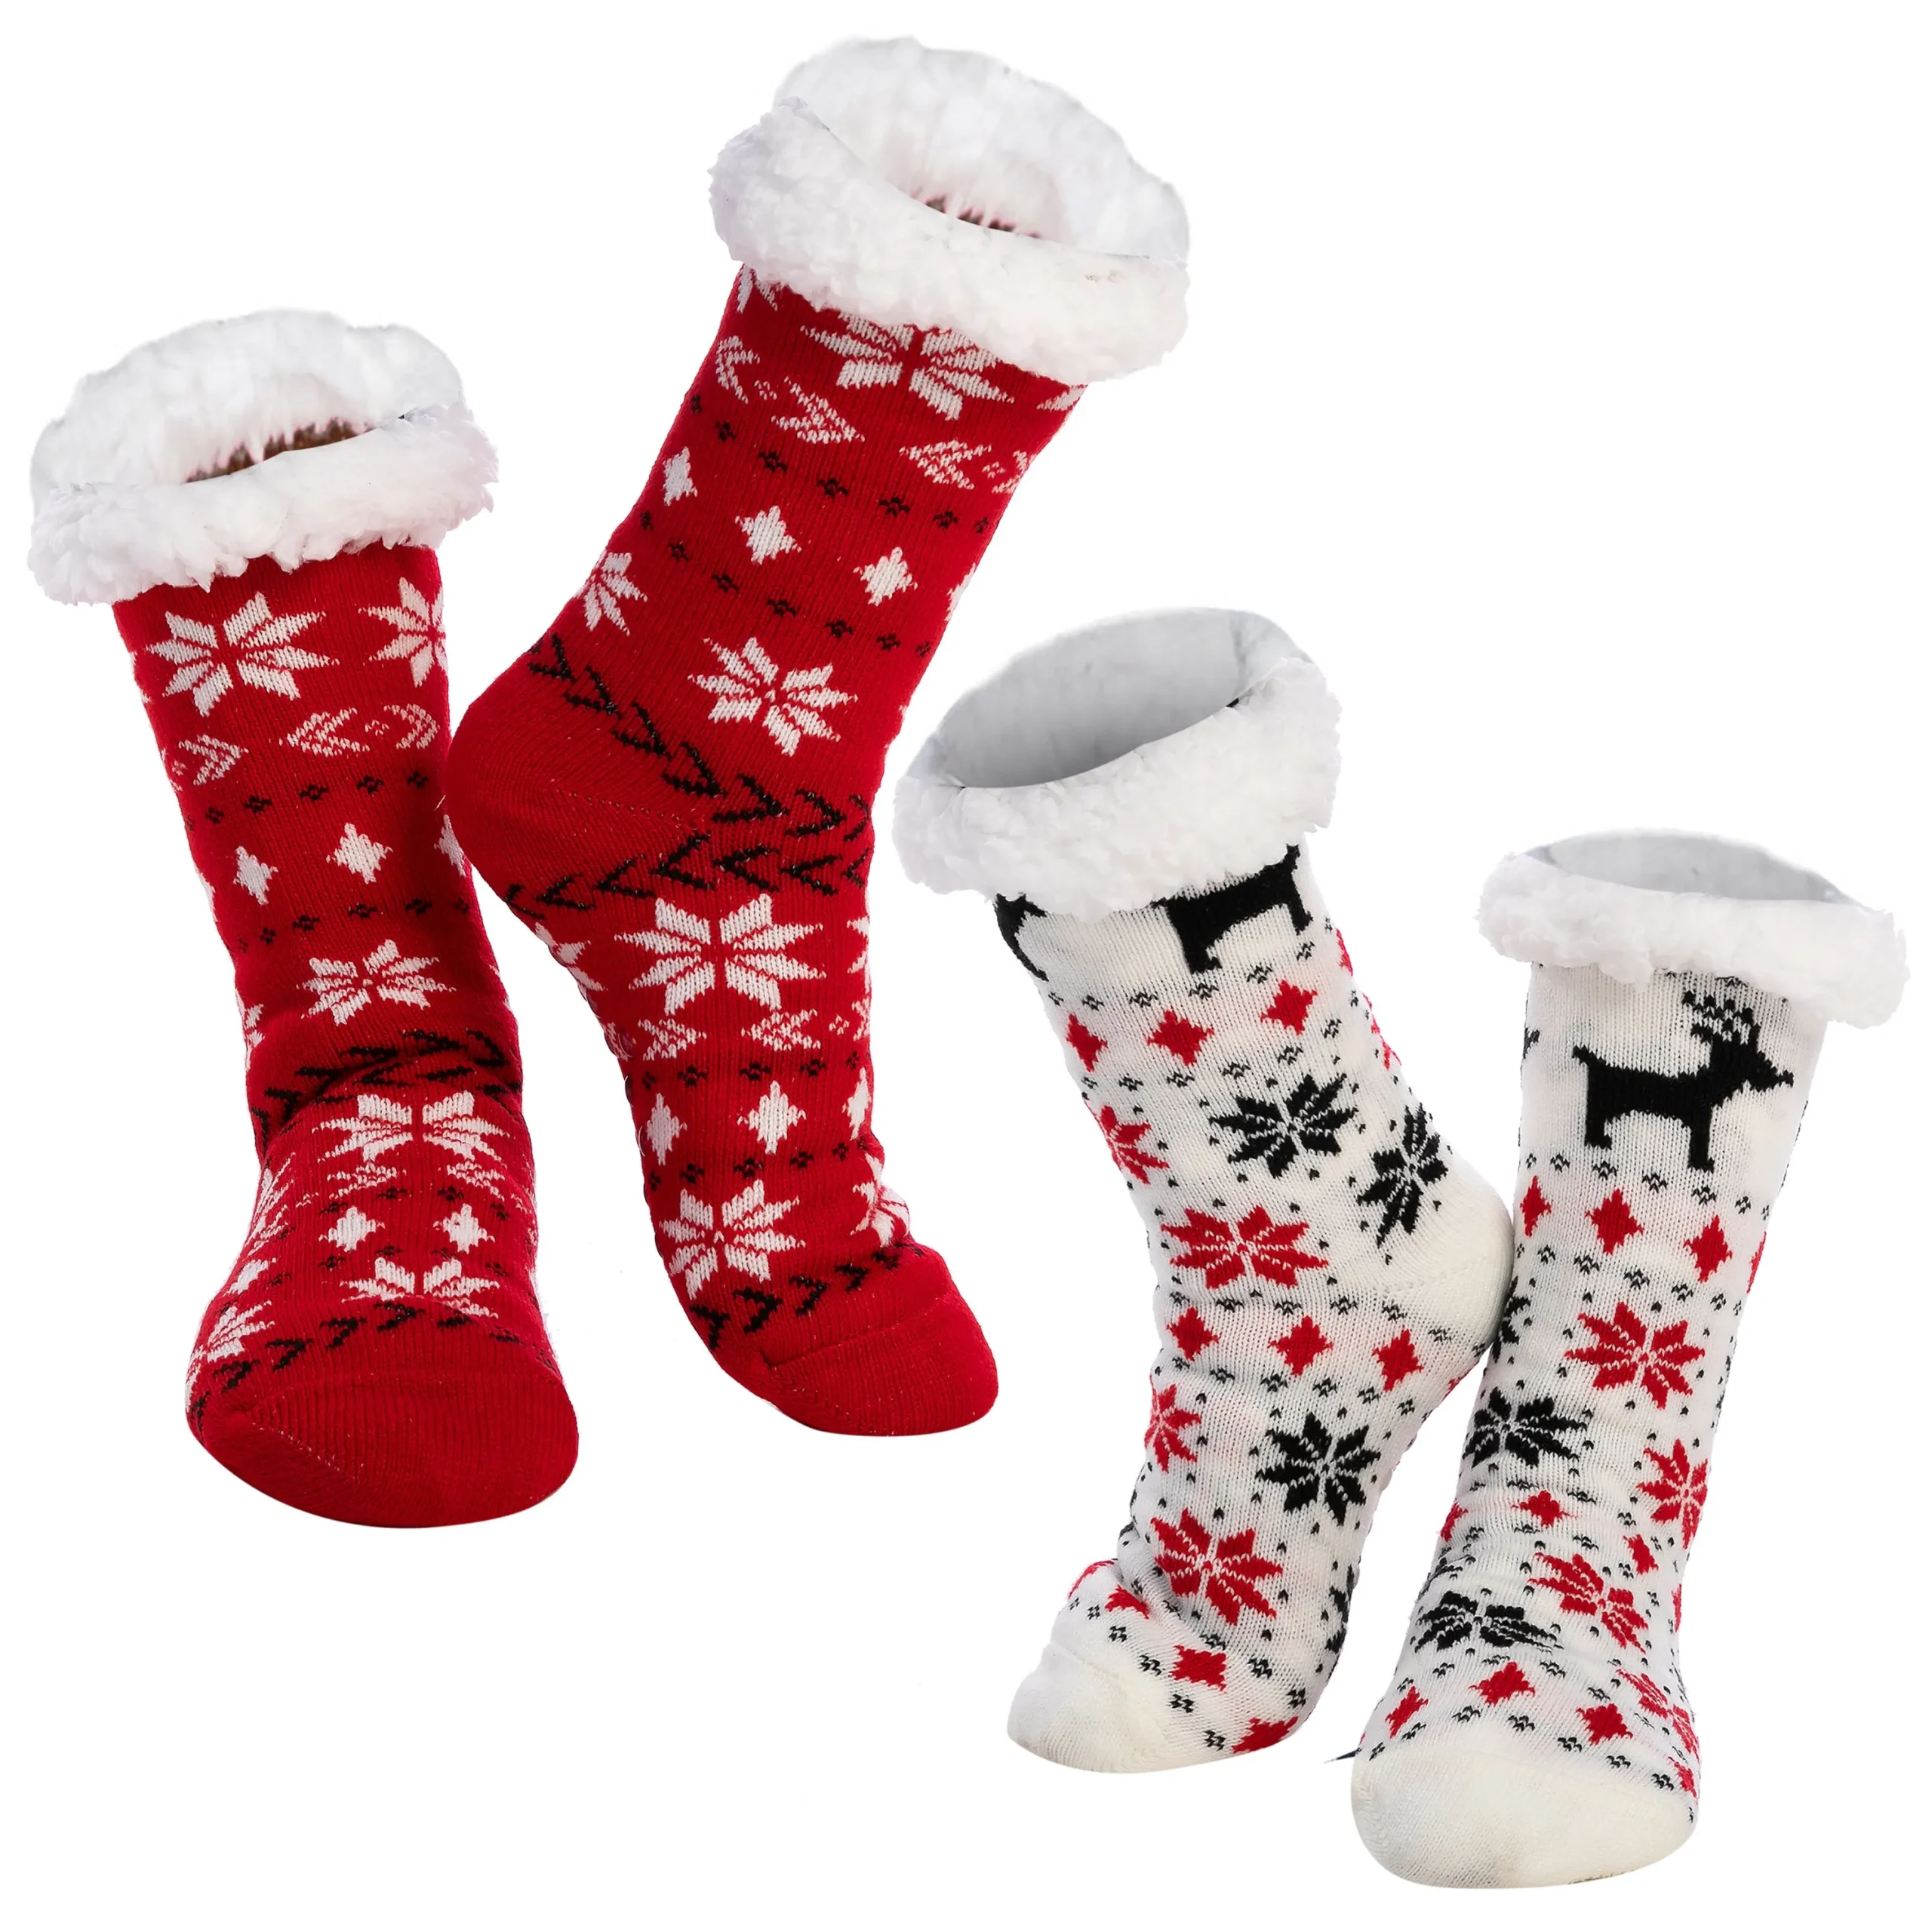 Best 2pcs Women's Red Soft Fuzzy Slipper Socks